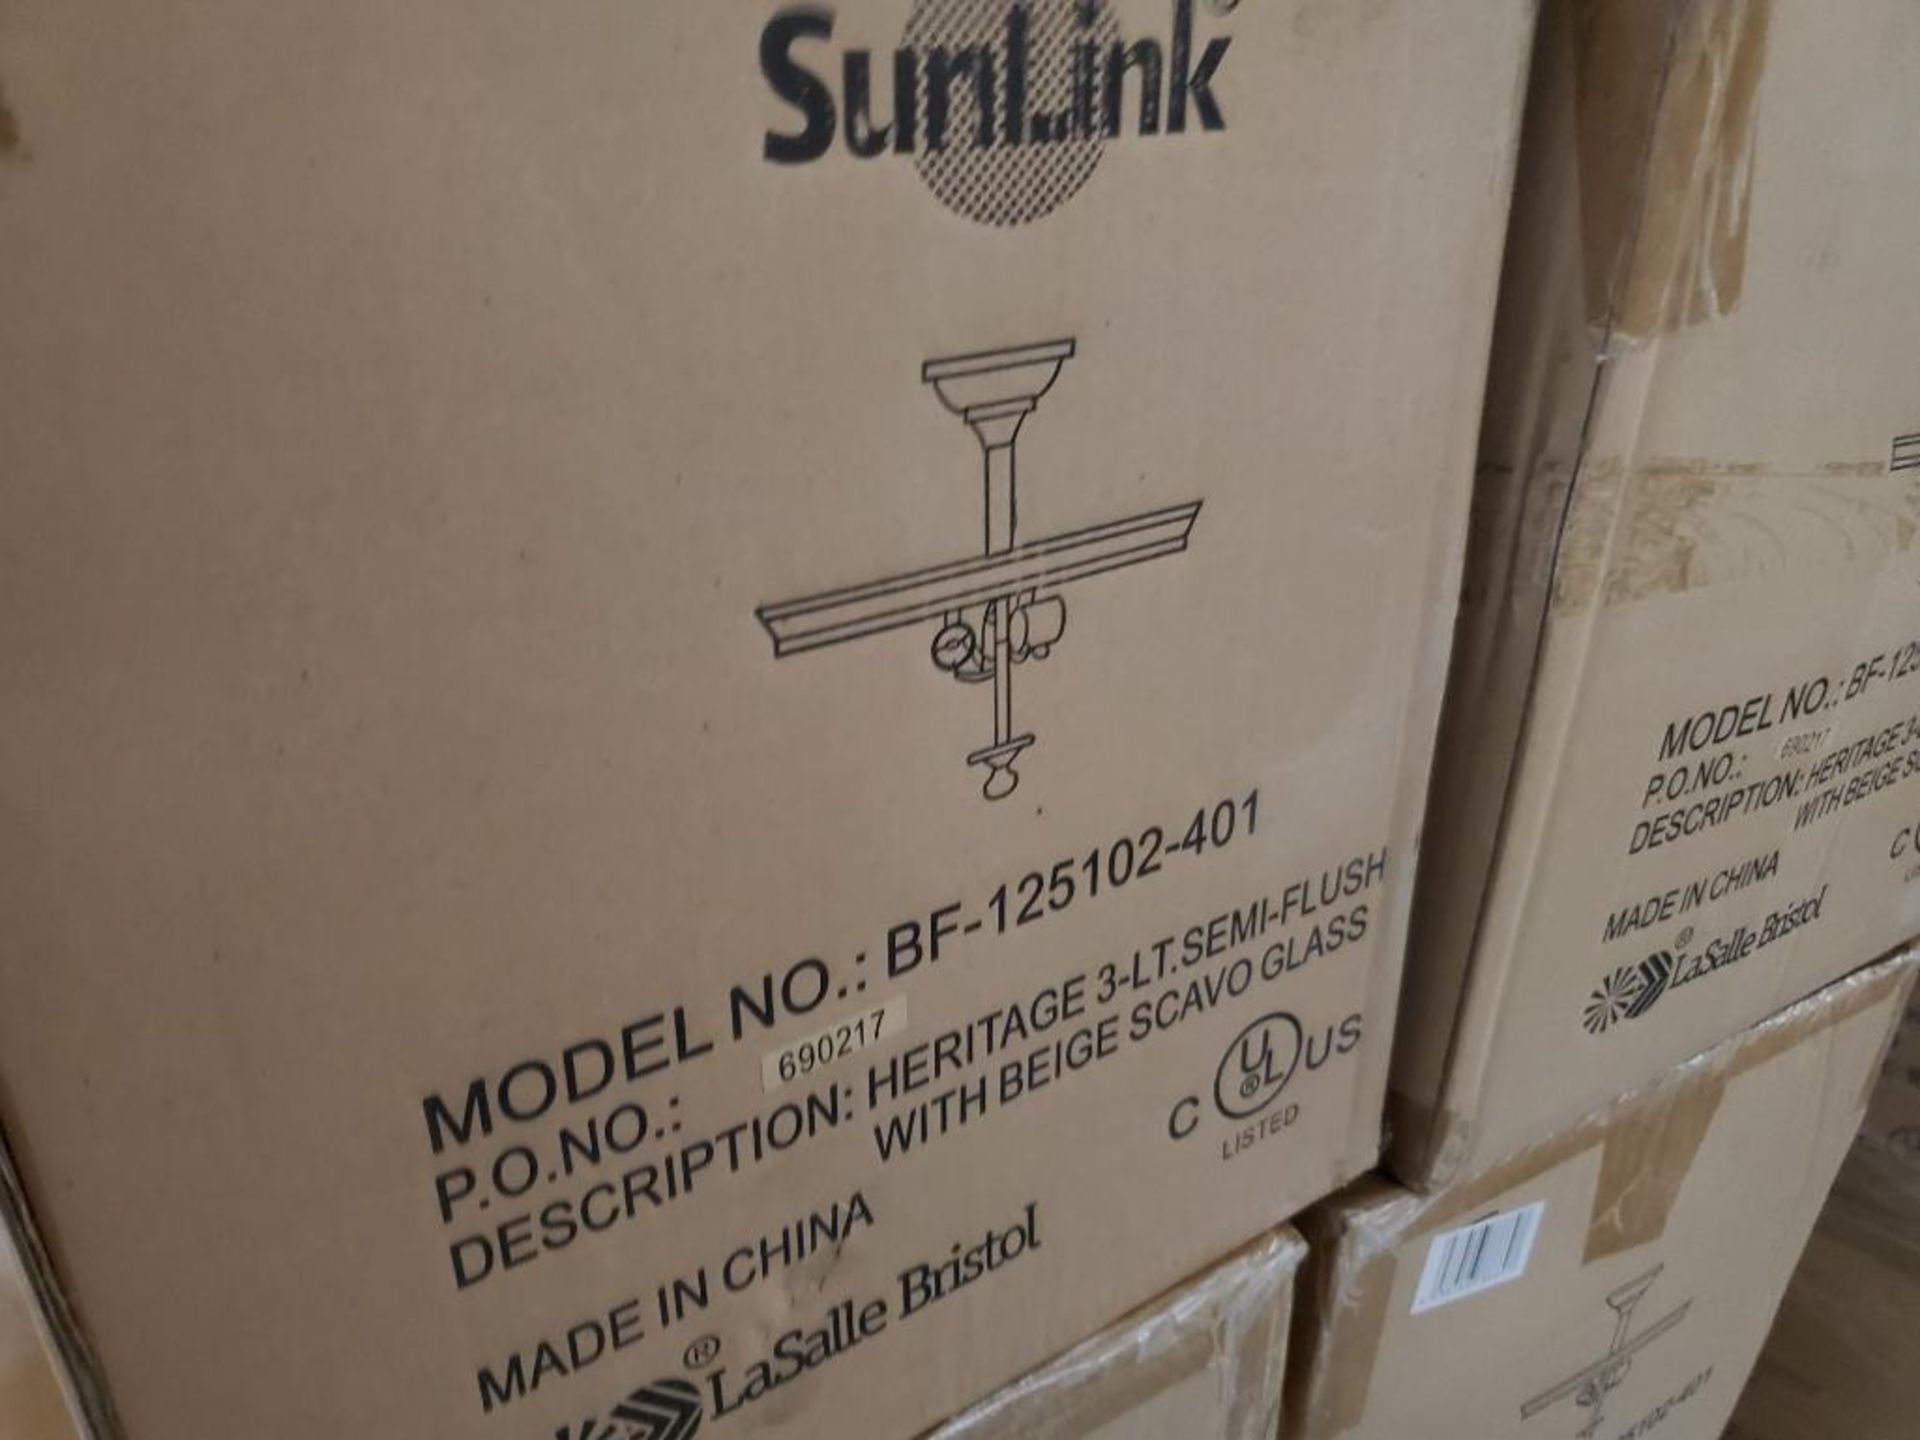 Qty 96 - SunLink 120 volt 3-bulb light. Part #BF-125102-401. New in bulk box. - Image 7 of 7